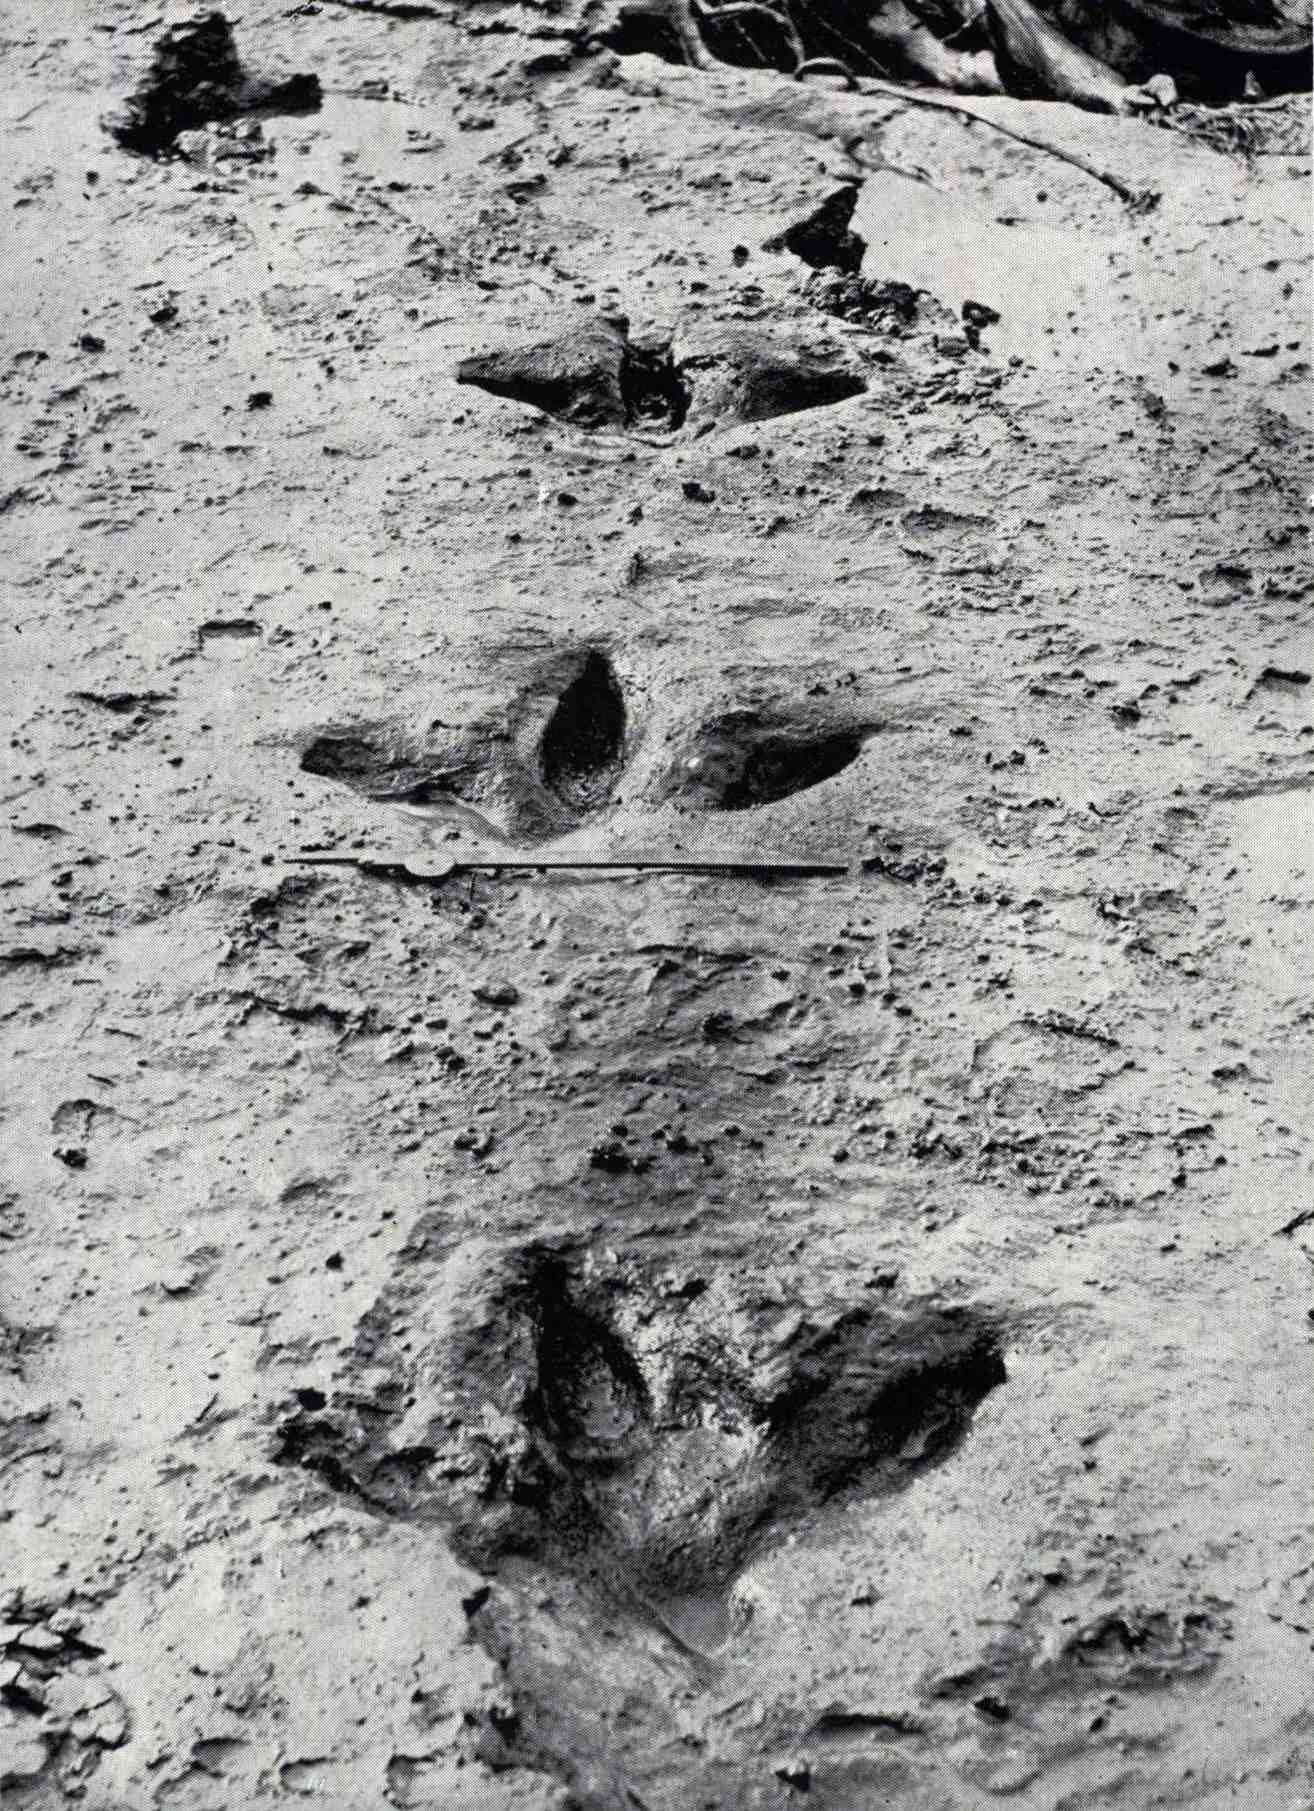 Dinornis robustus-ის ეს ნაკვალევი გამოიკვეთა 1911 წლის აგვისტოში, როდესაც მდინარე მანავატუში წყალდიდობამ წაიღო ლურჯი თიხა, რომელიც დაფარა და შეინარჩუნა ისინი. ისინი აჩვენებენ, რომ მოაას ჰქონდა სამი ძლიერი წინა მიმართული თითი და სხვა ჯირკვლებისგან განსხვავებით, მცირე უკანა თითი.